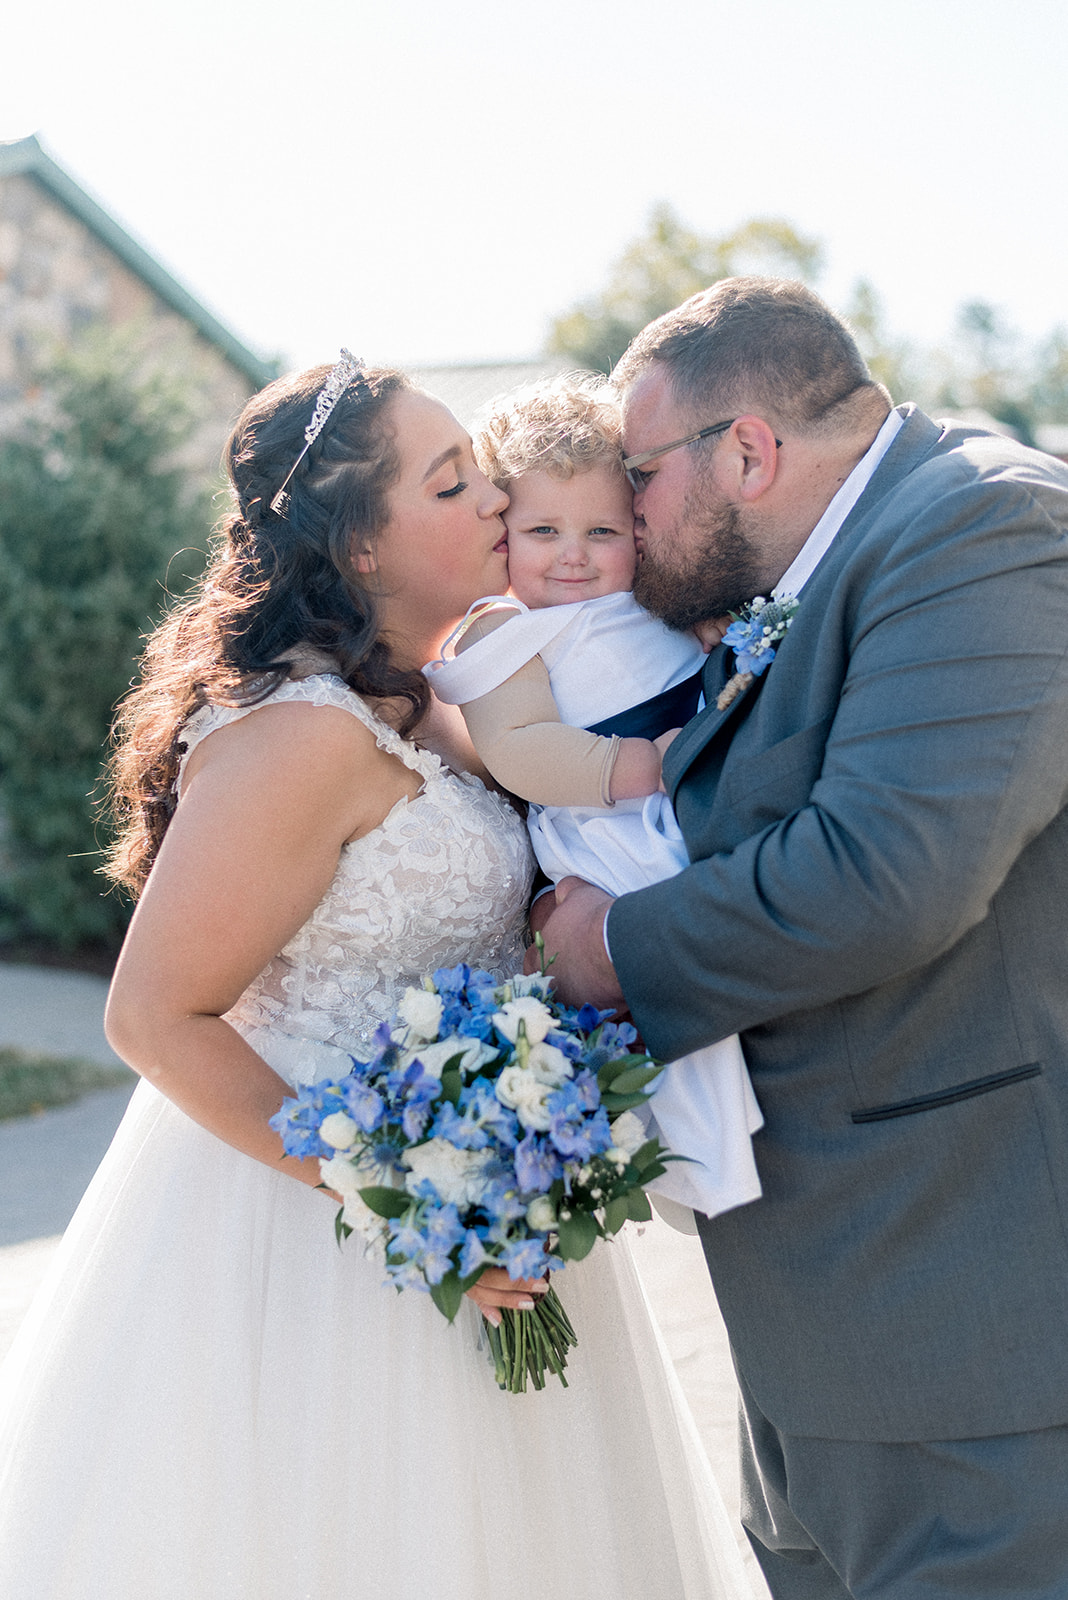 Pennsylvania wedding photographer captures bride and groom kissing baby's cheeks